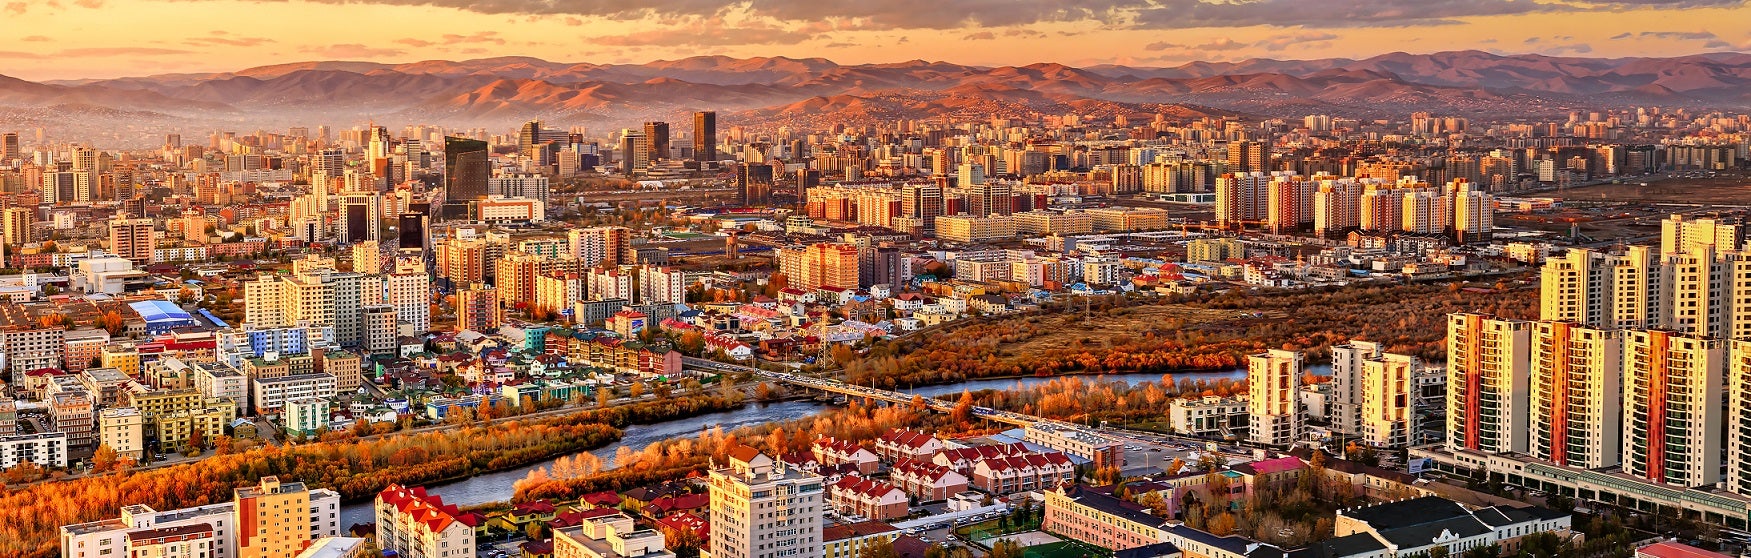 Ulaanbaatar Mongolia. Photo Credit: © [Michal] / Adobe Stock